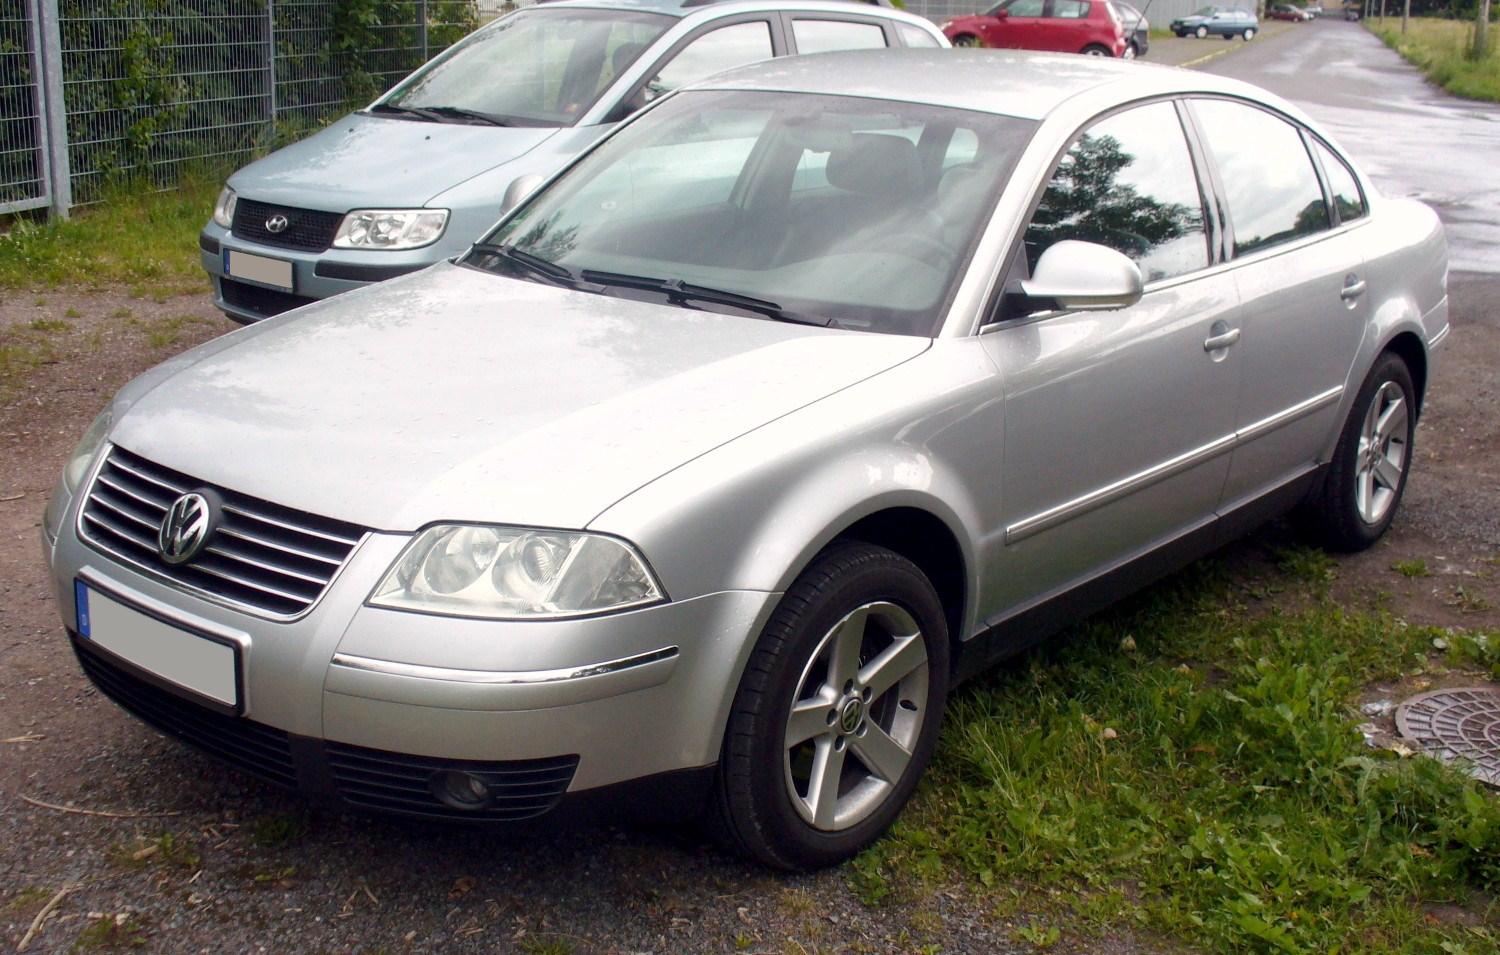 File:Volkswagen Passat B5.jpg - Wikipedia